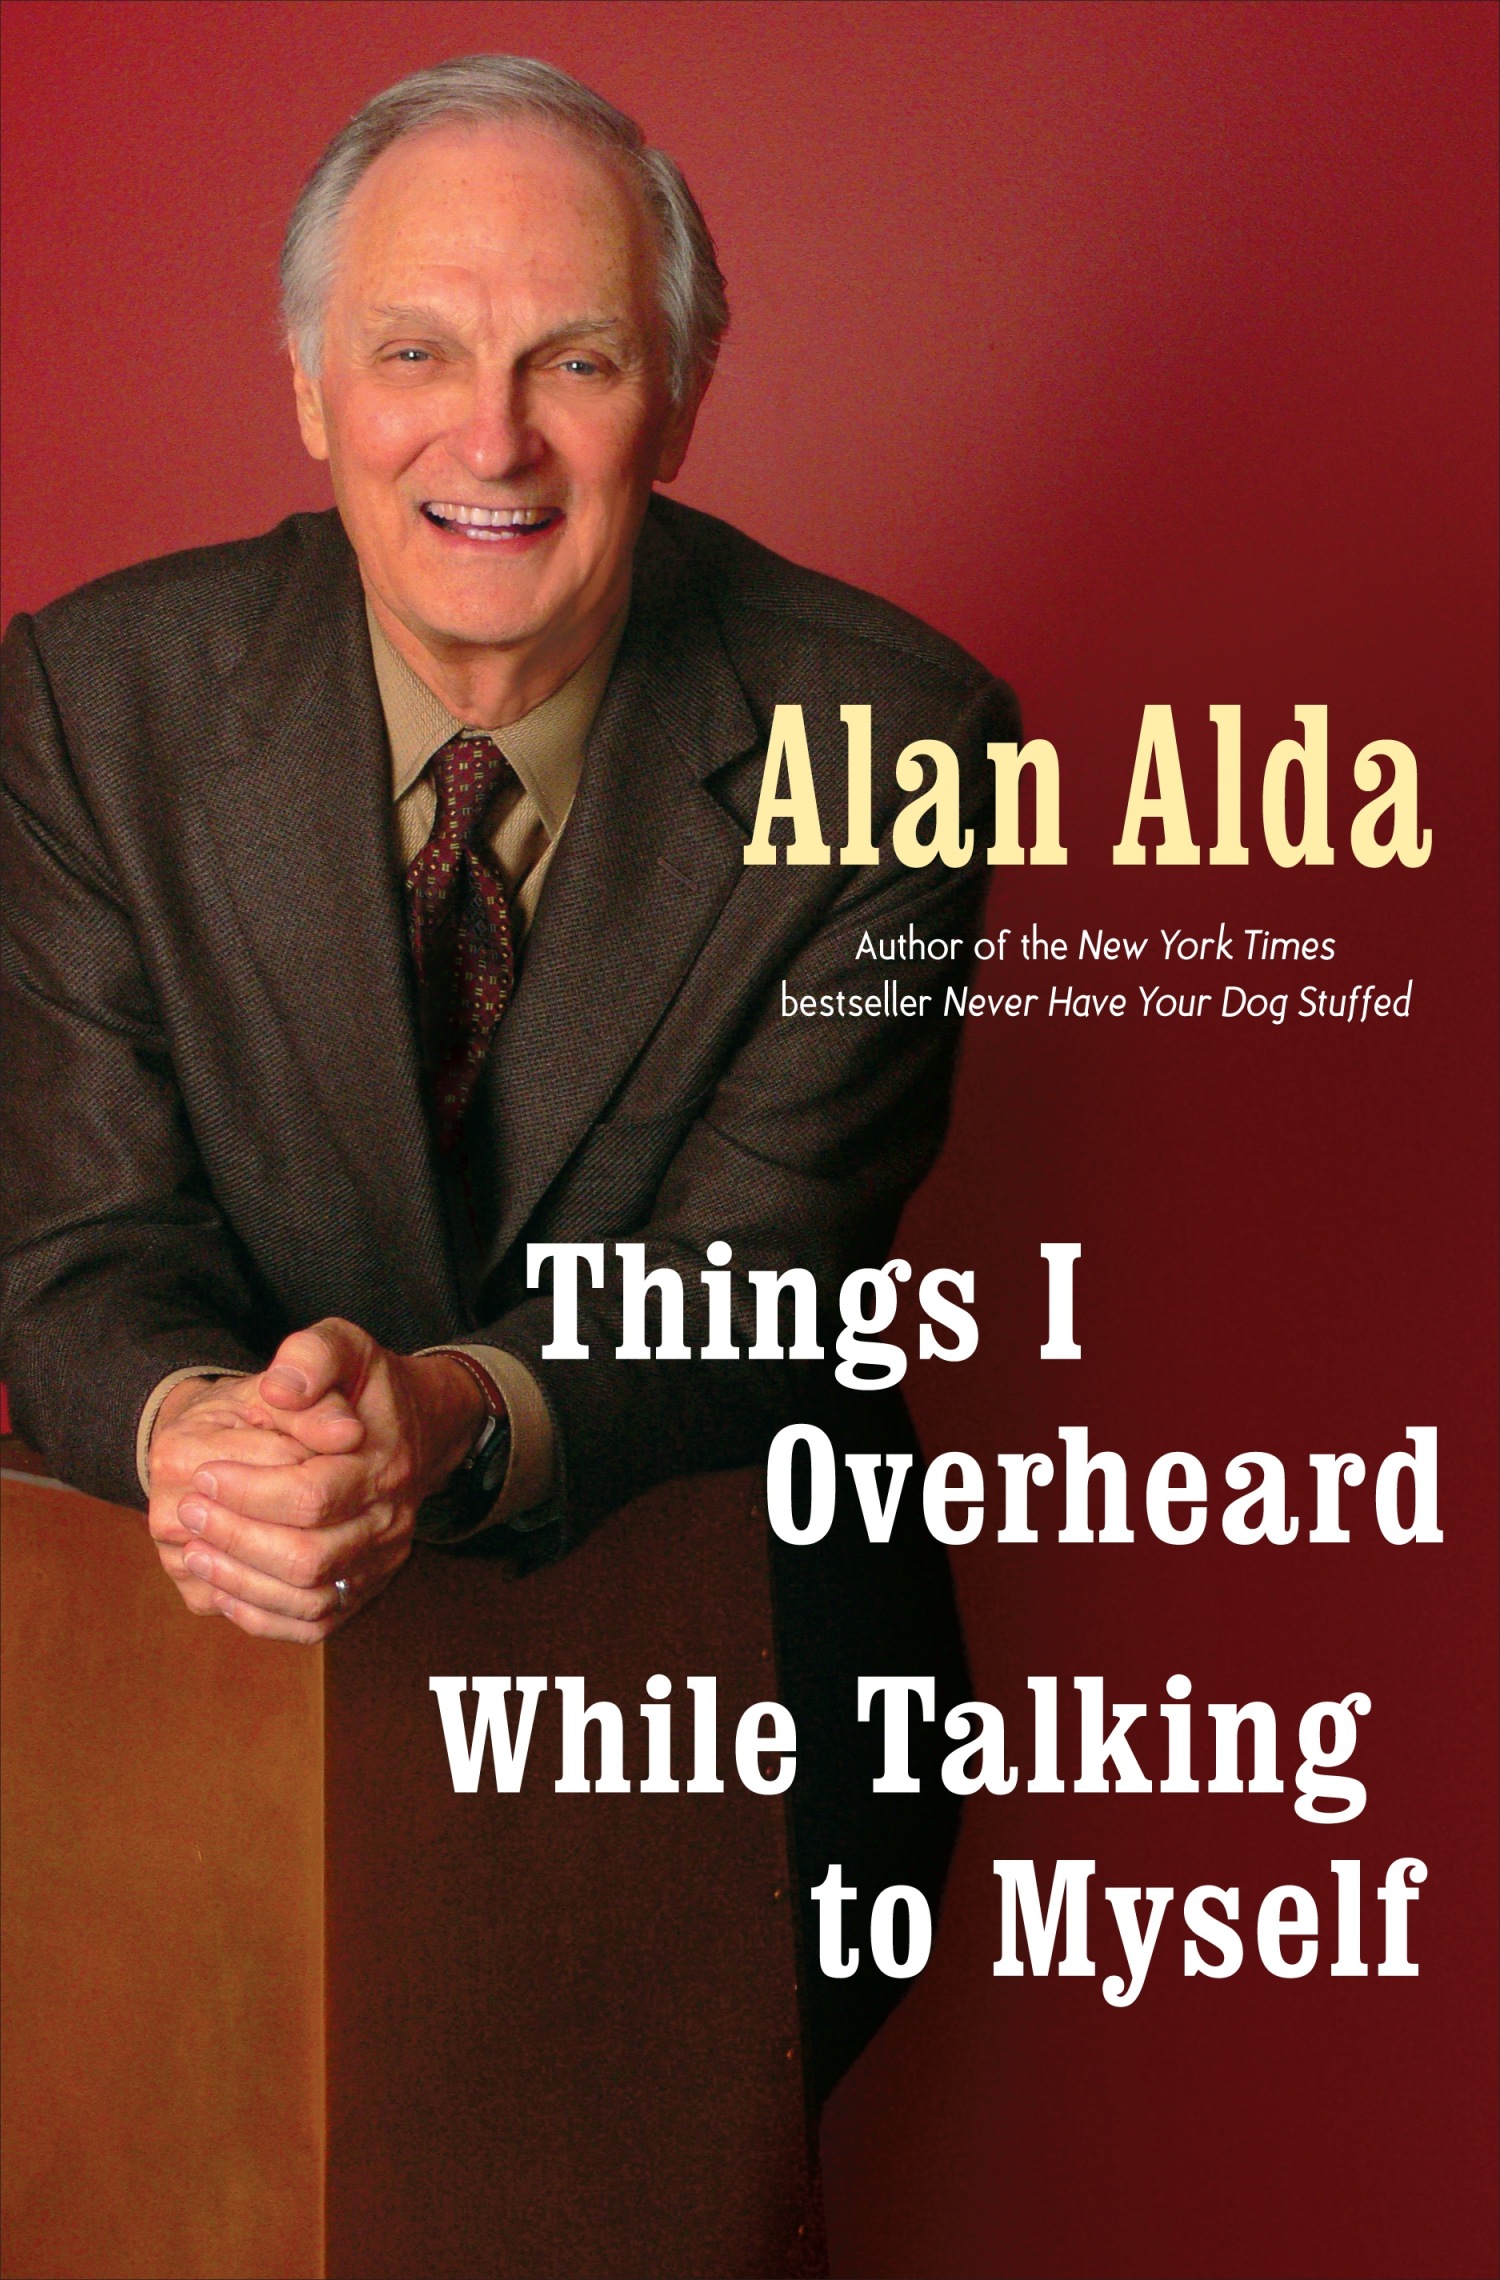 Alan Alda's Life in Photos